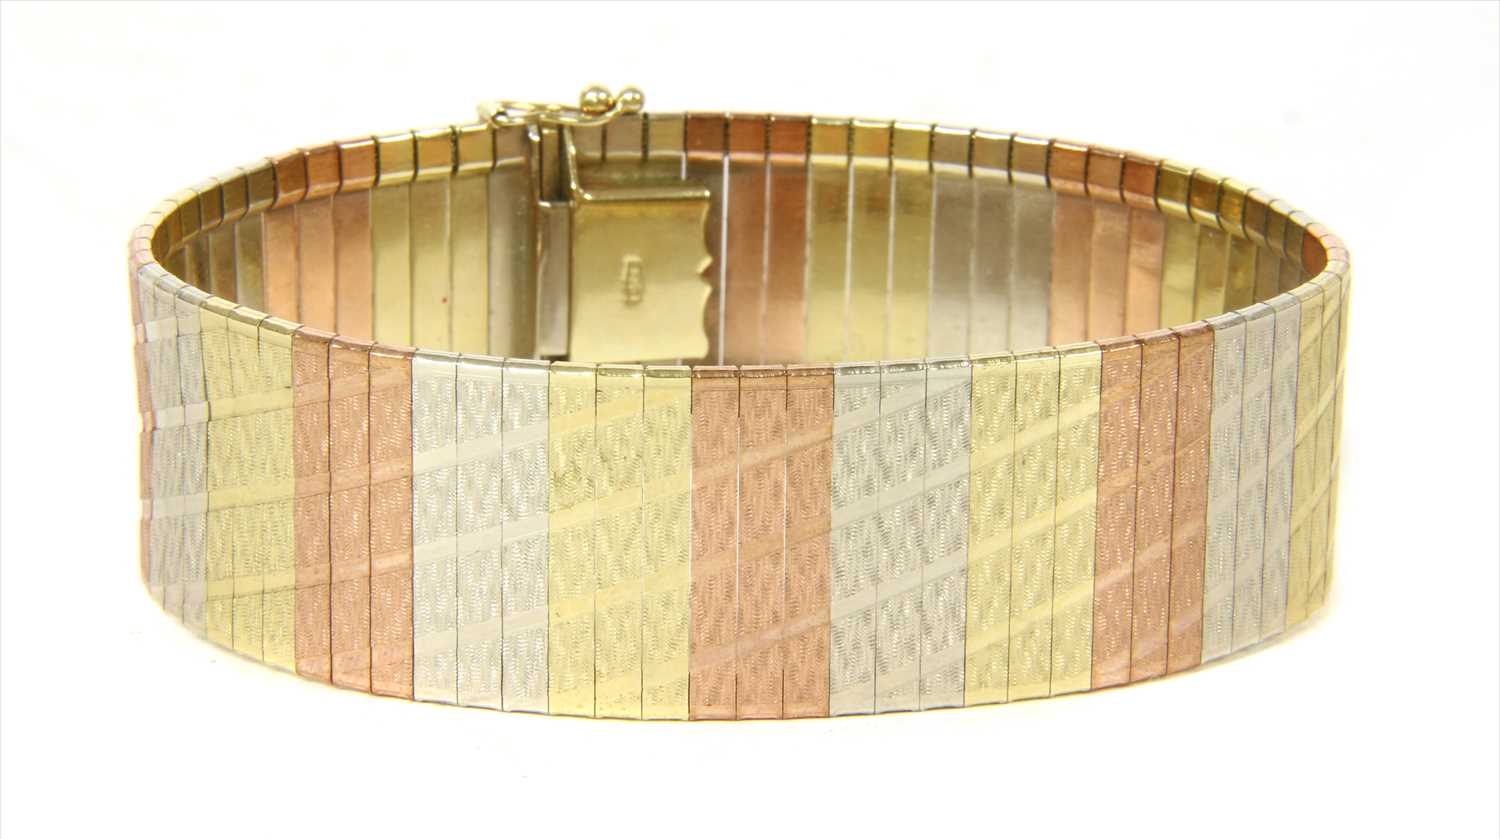 Tri-Color Gold Bracelet - The Amor Diamond Cut Bracelet